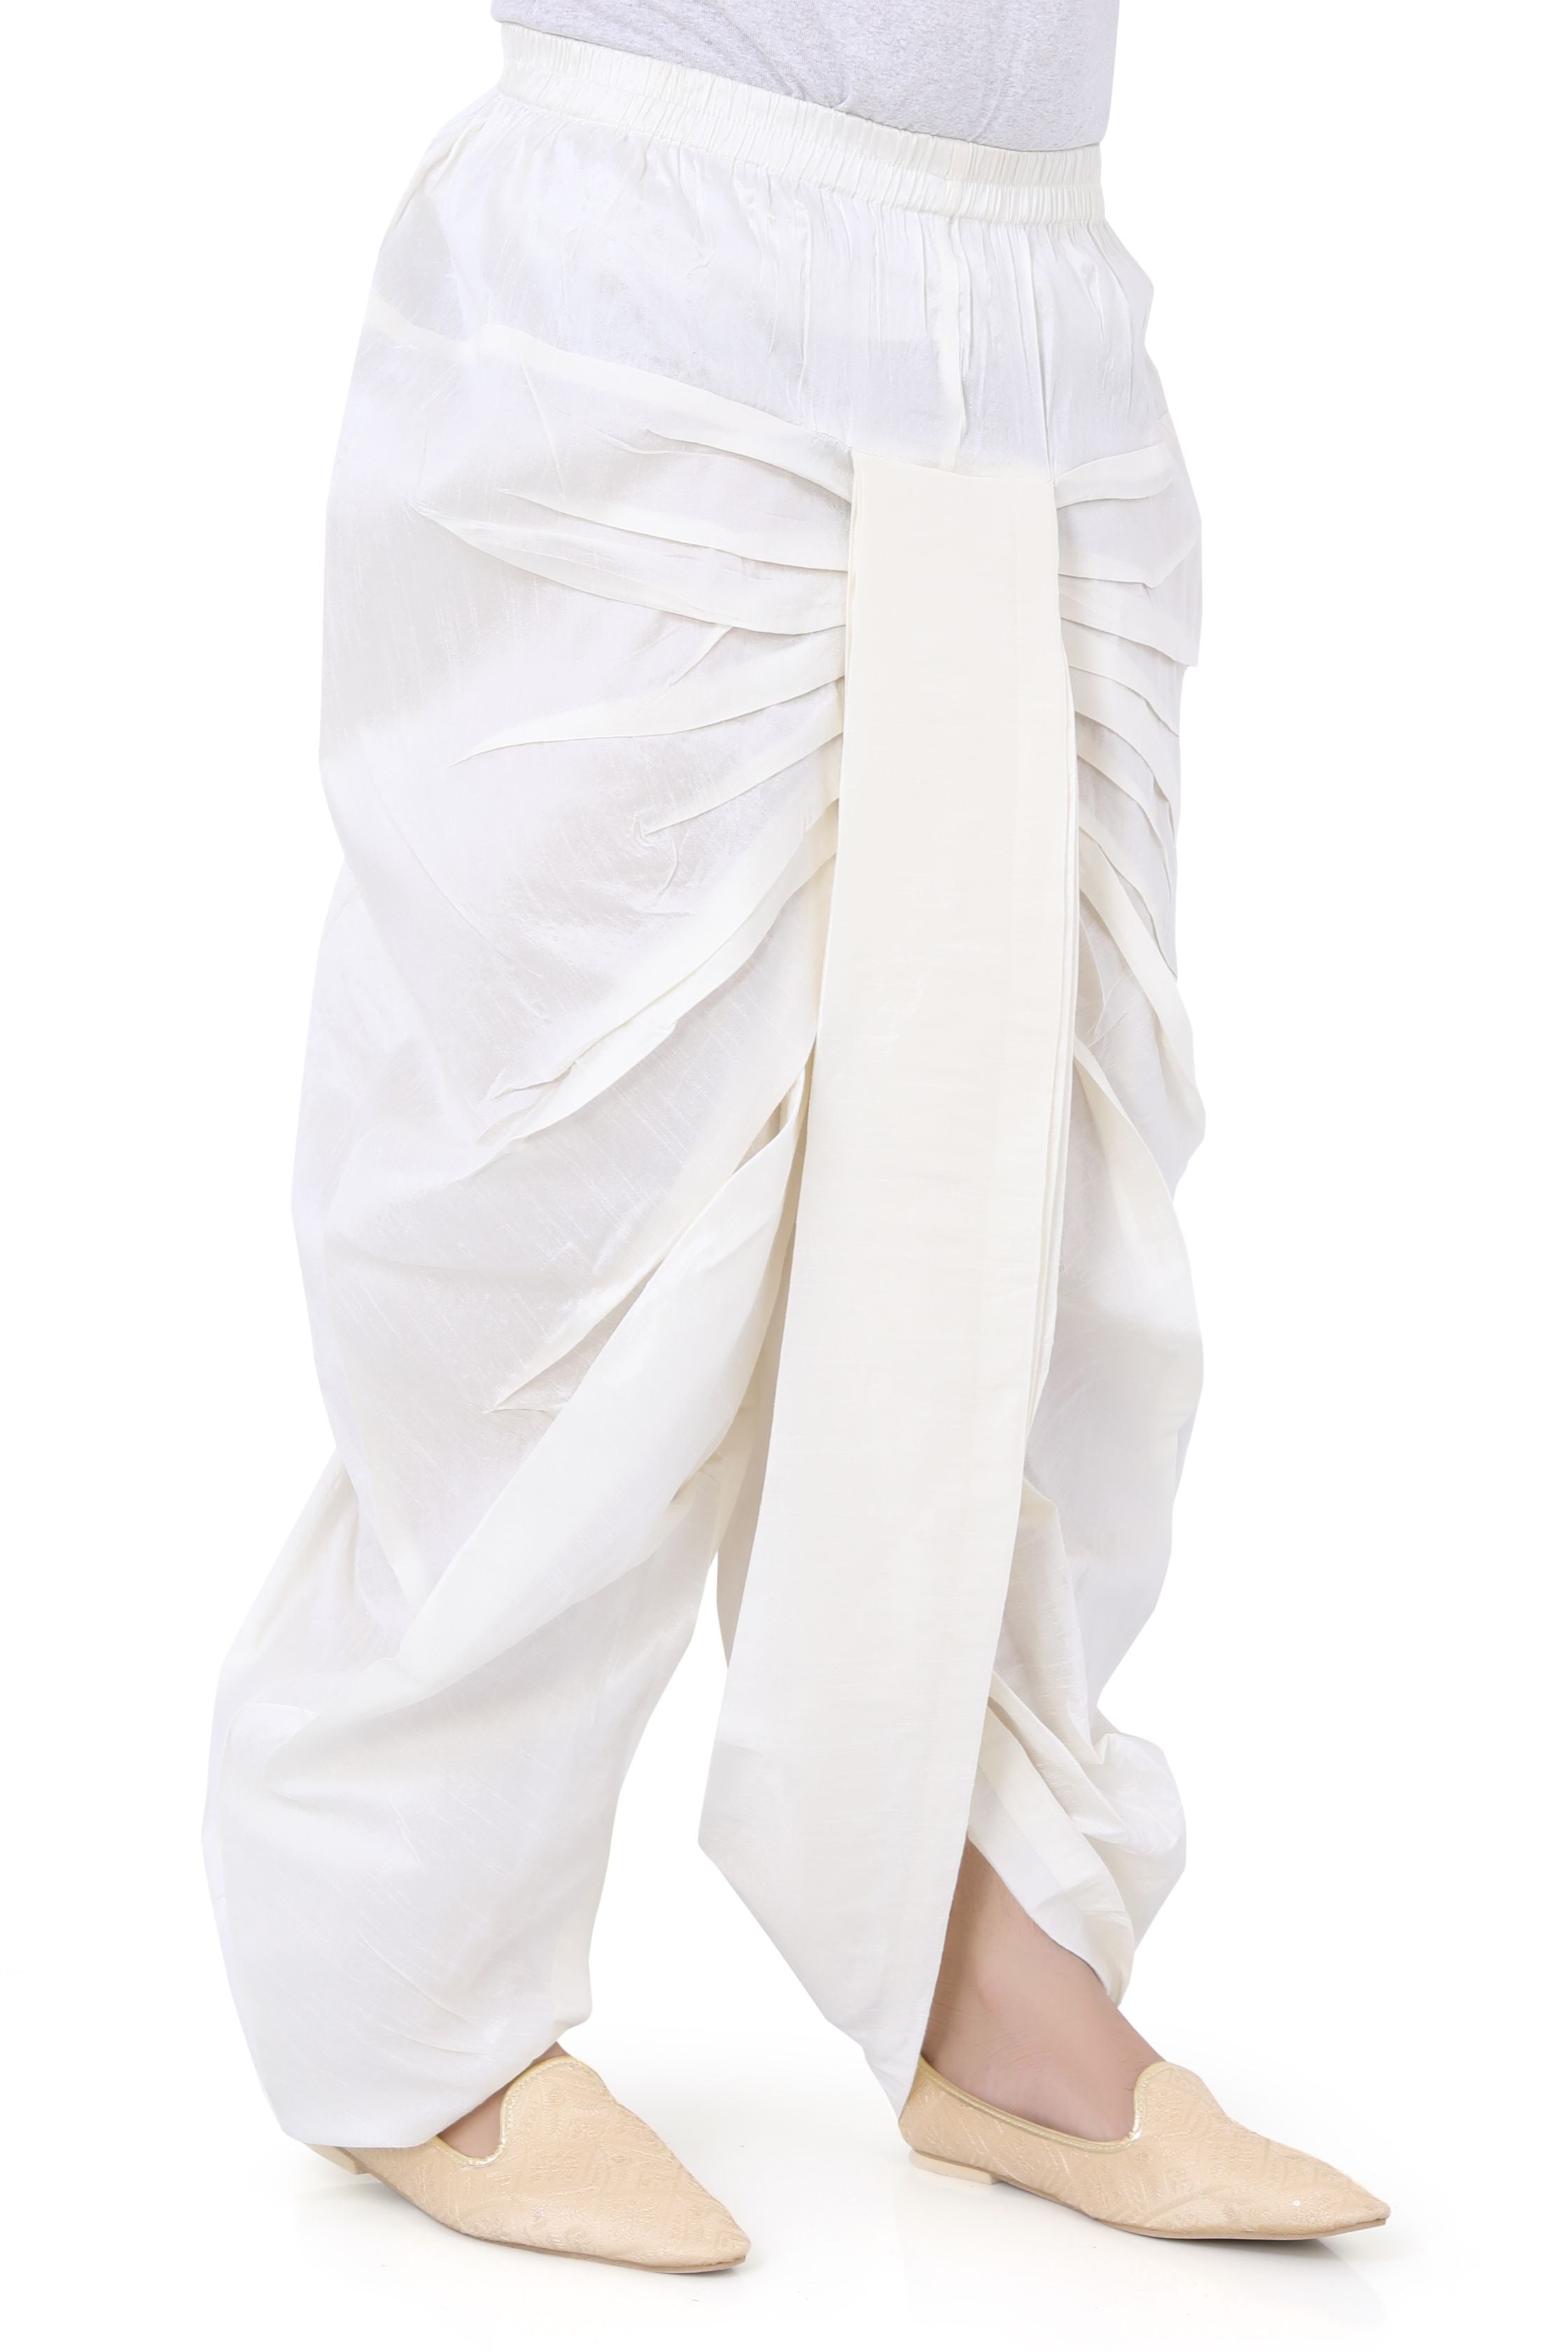 Dupion Silk Dhoti in White Colour